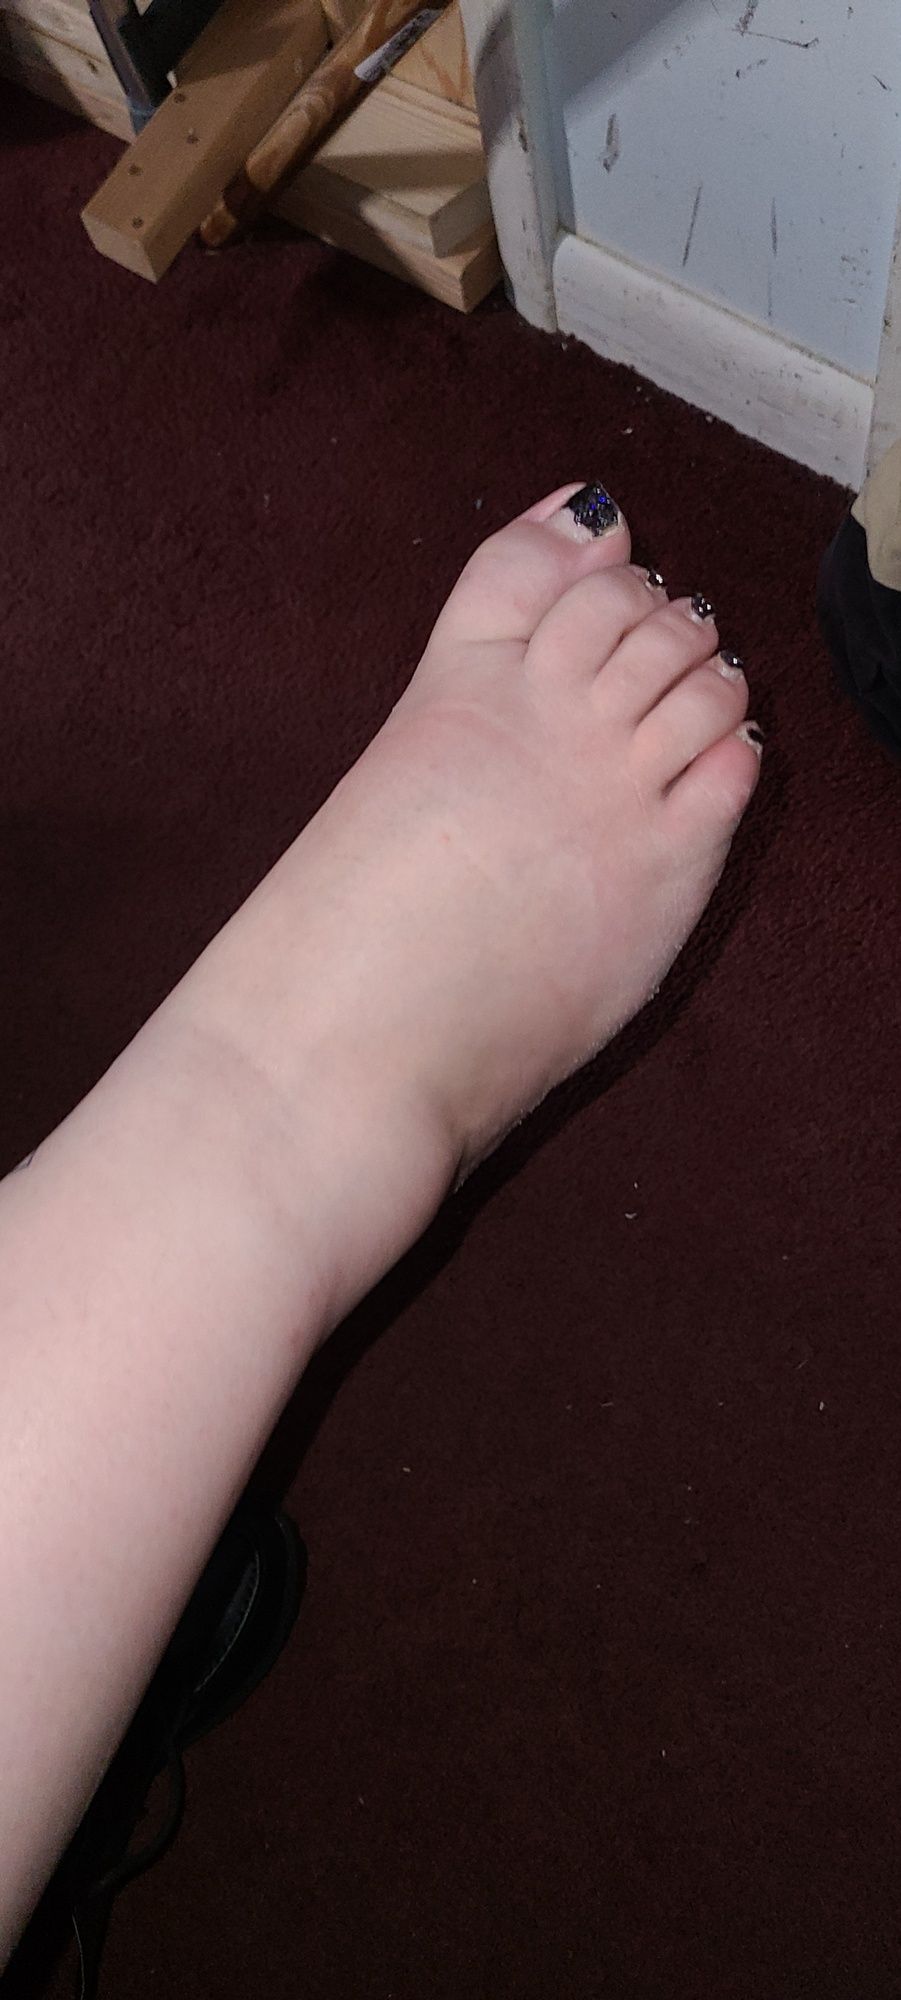 Lil feets #21